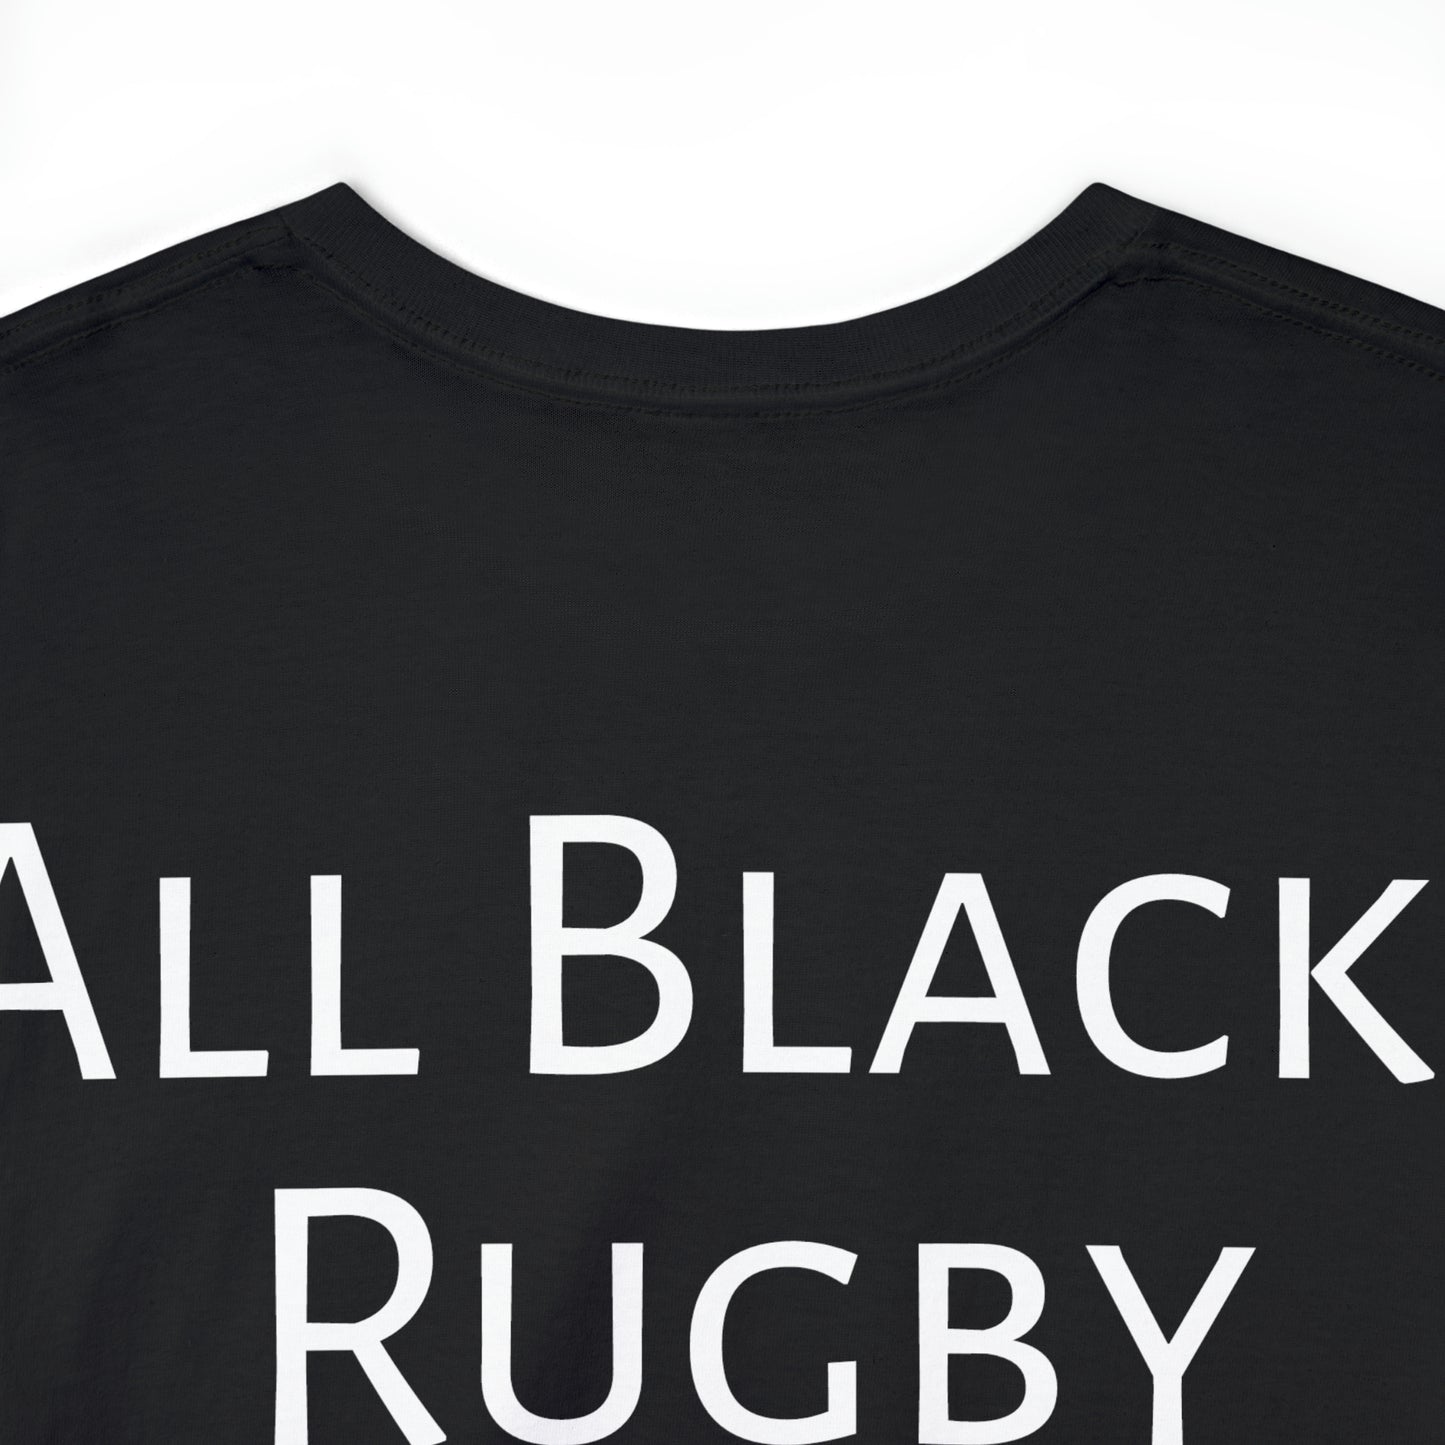 Māori Warrior - black shirt